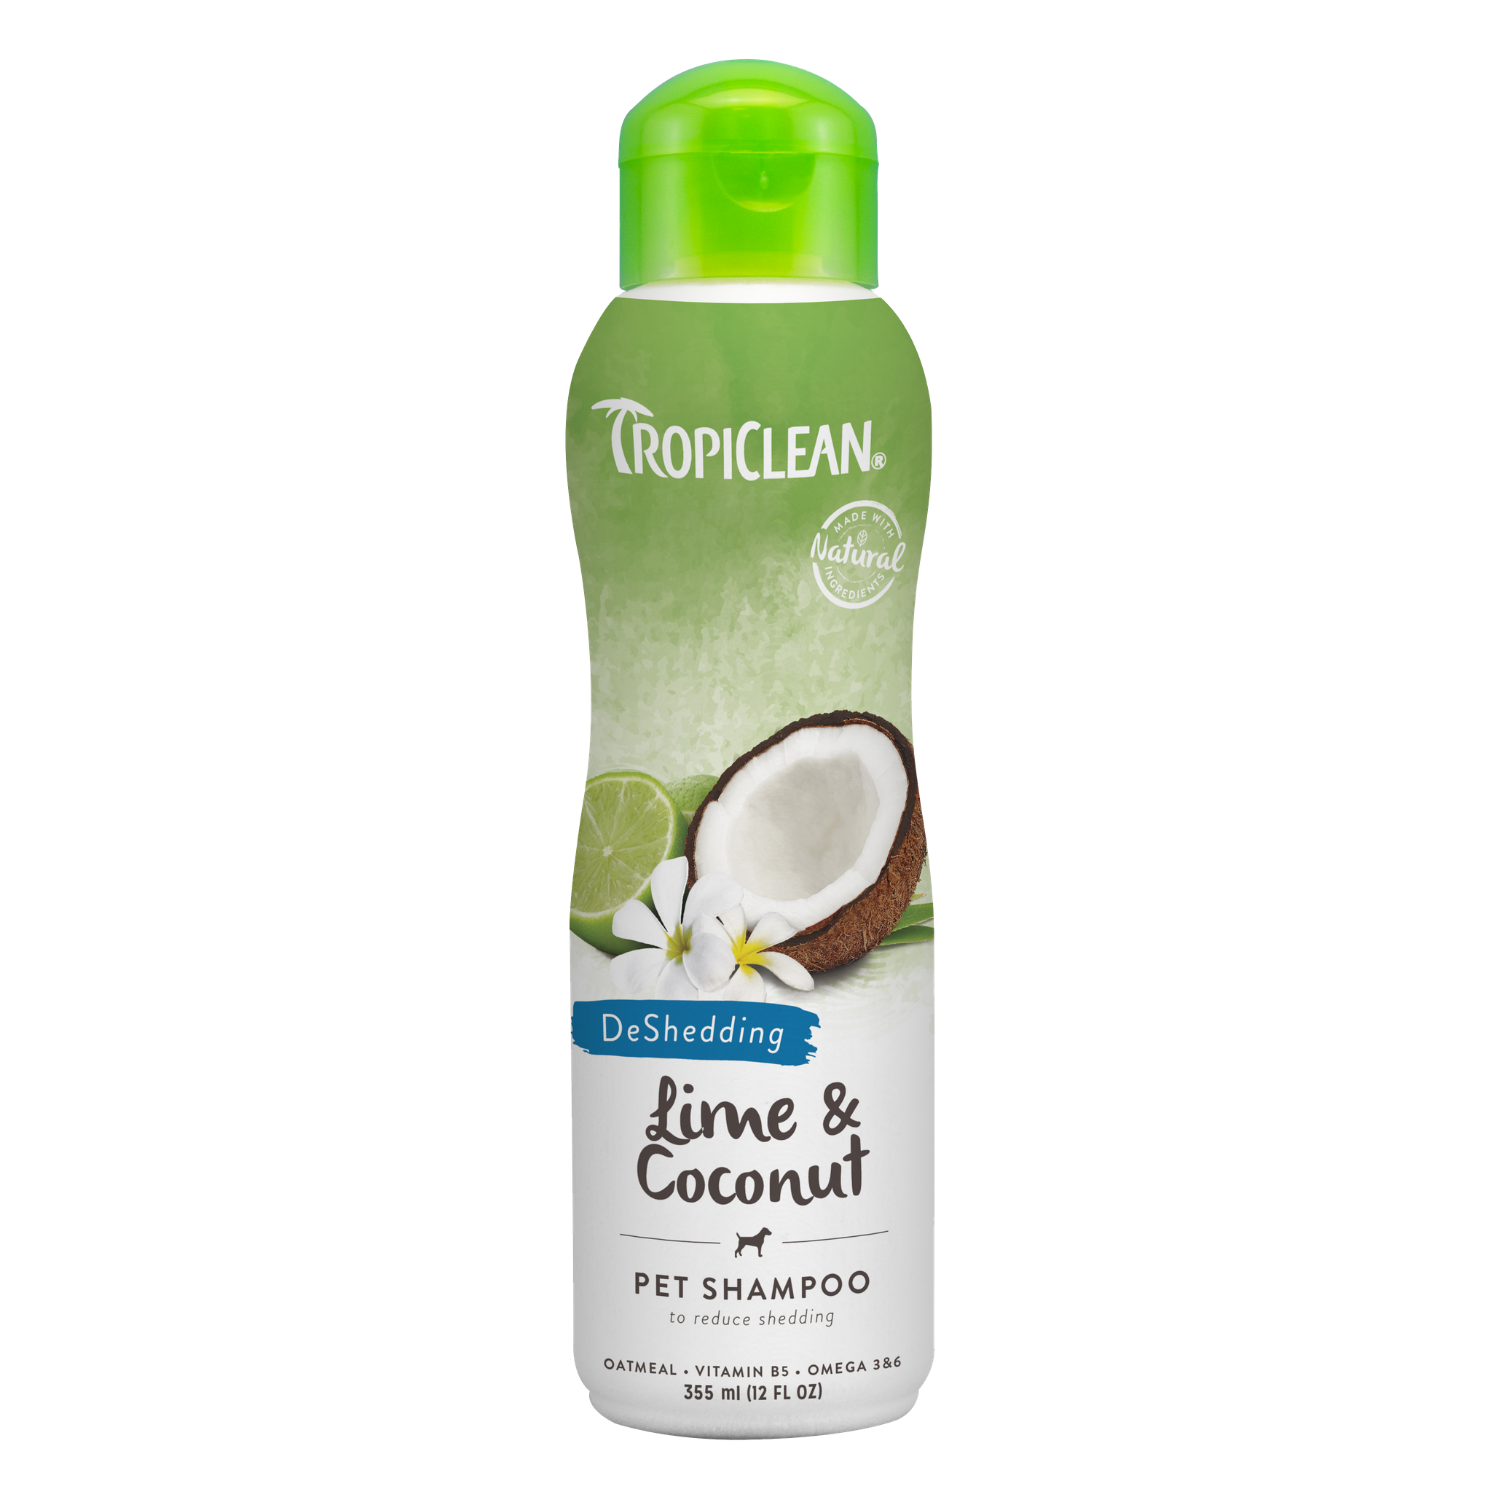 Tropiclean Lime & Coconut Pet Shampoo (DeShedding) - 355ml / 3.79L